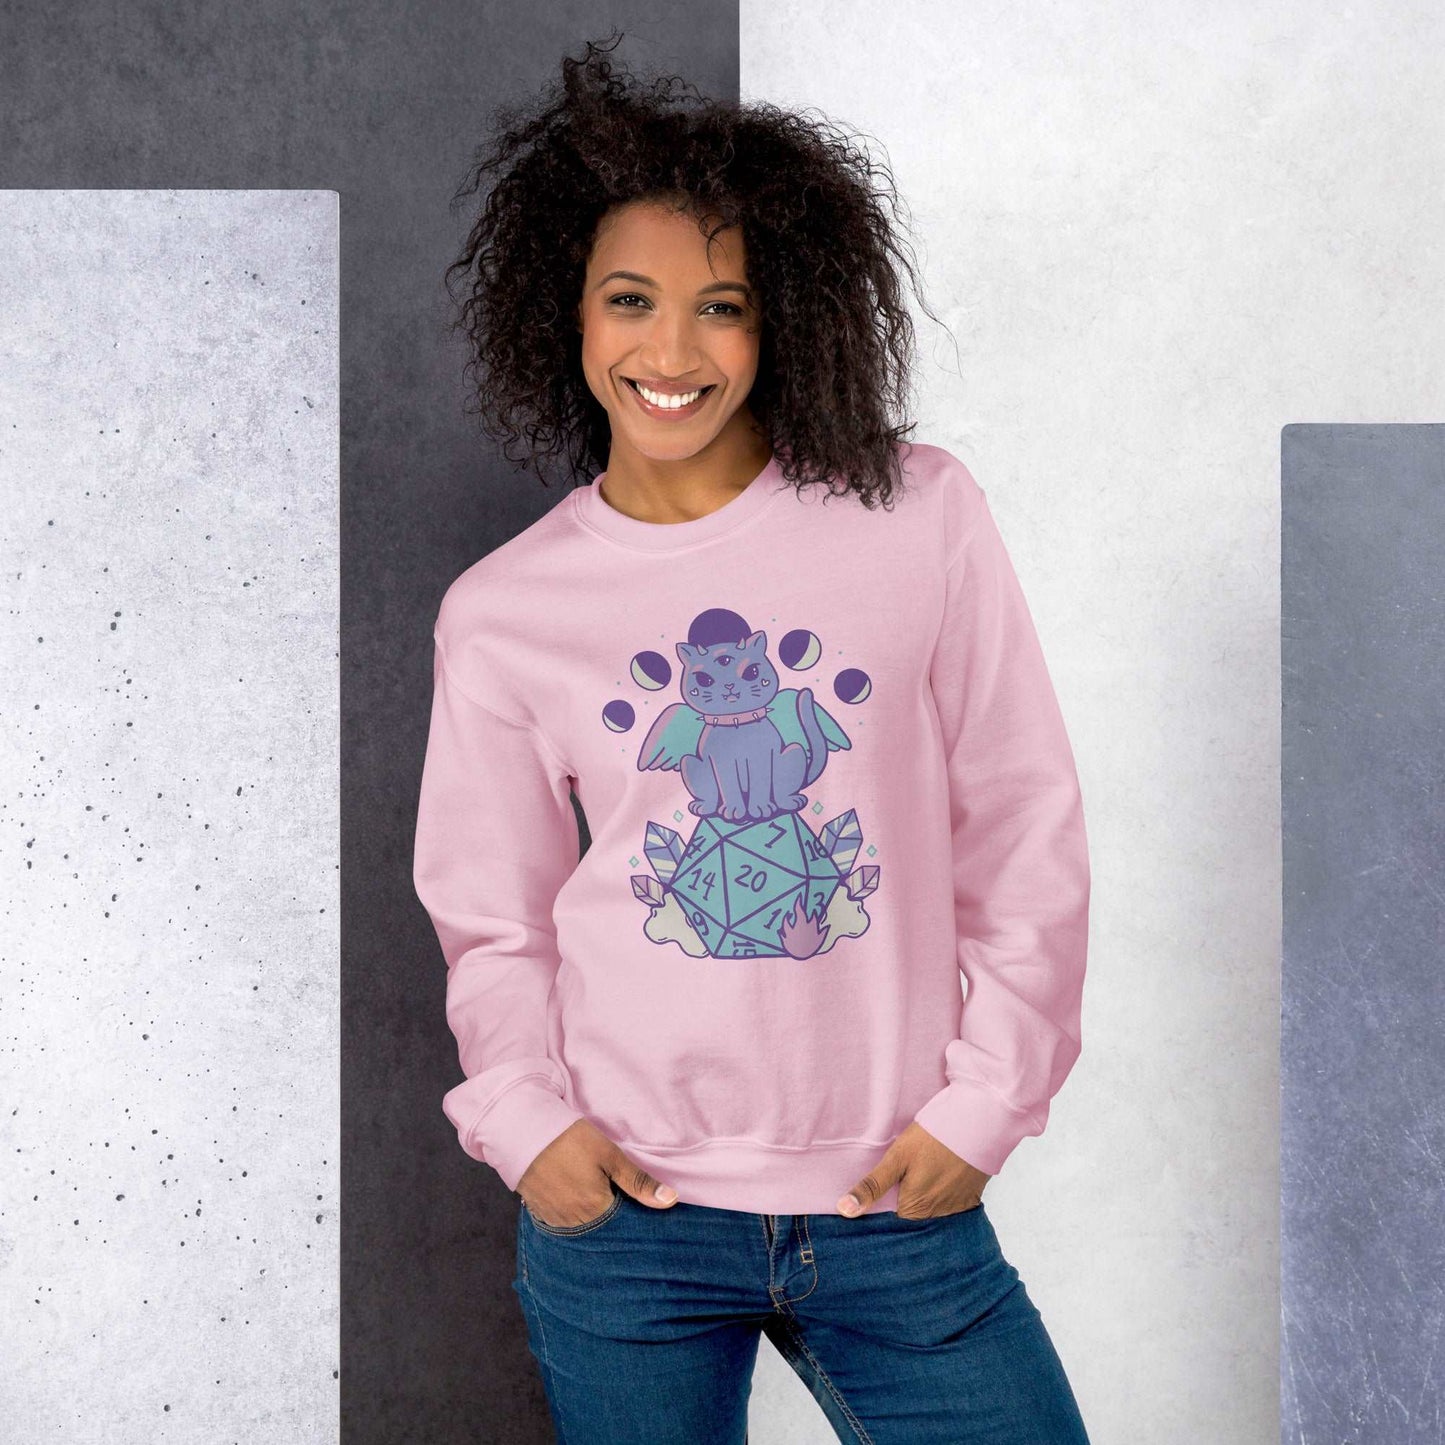 DnD Cat D20 Sweatshirt - Cute Dungeons & Dragons Sweatshirt Sweatshirt